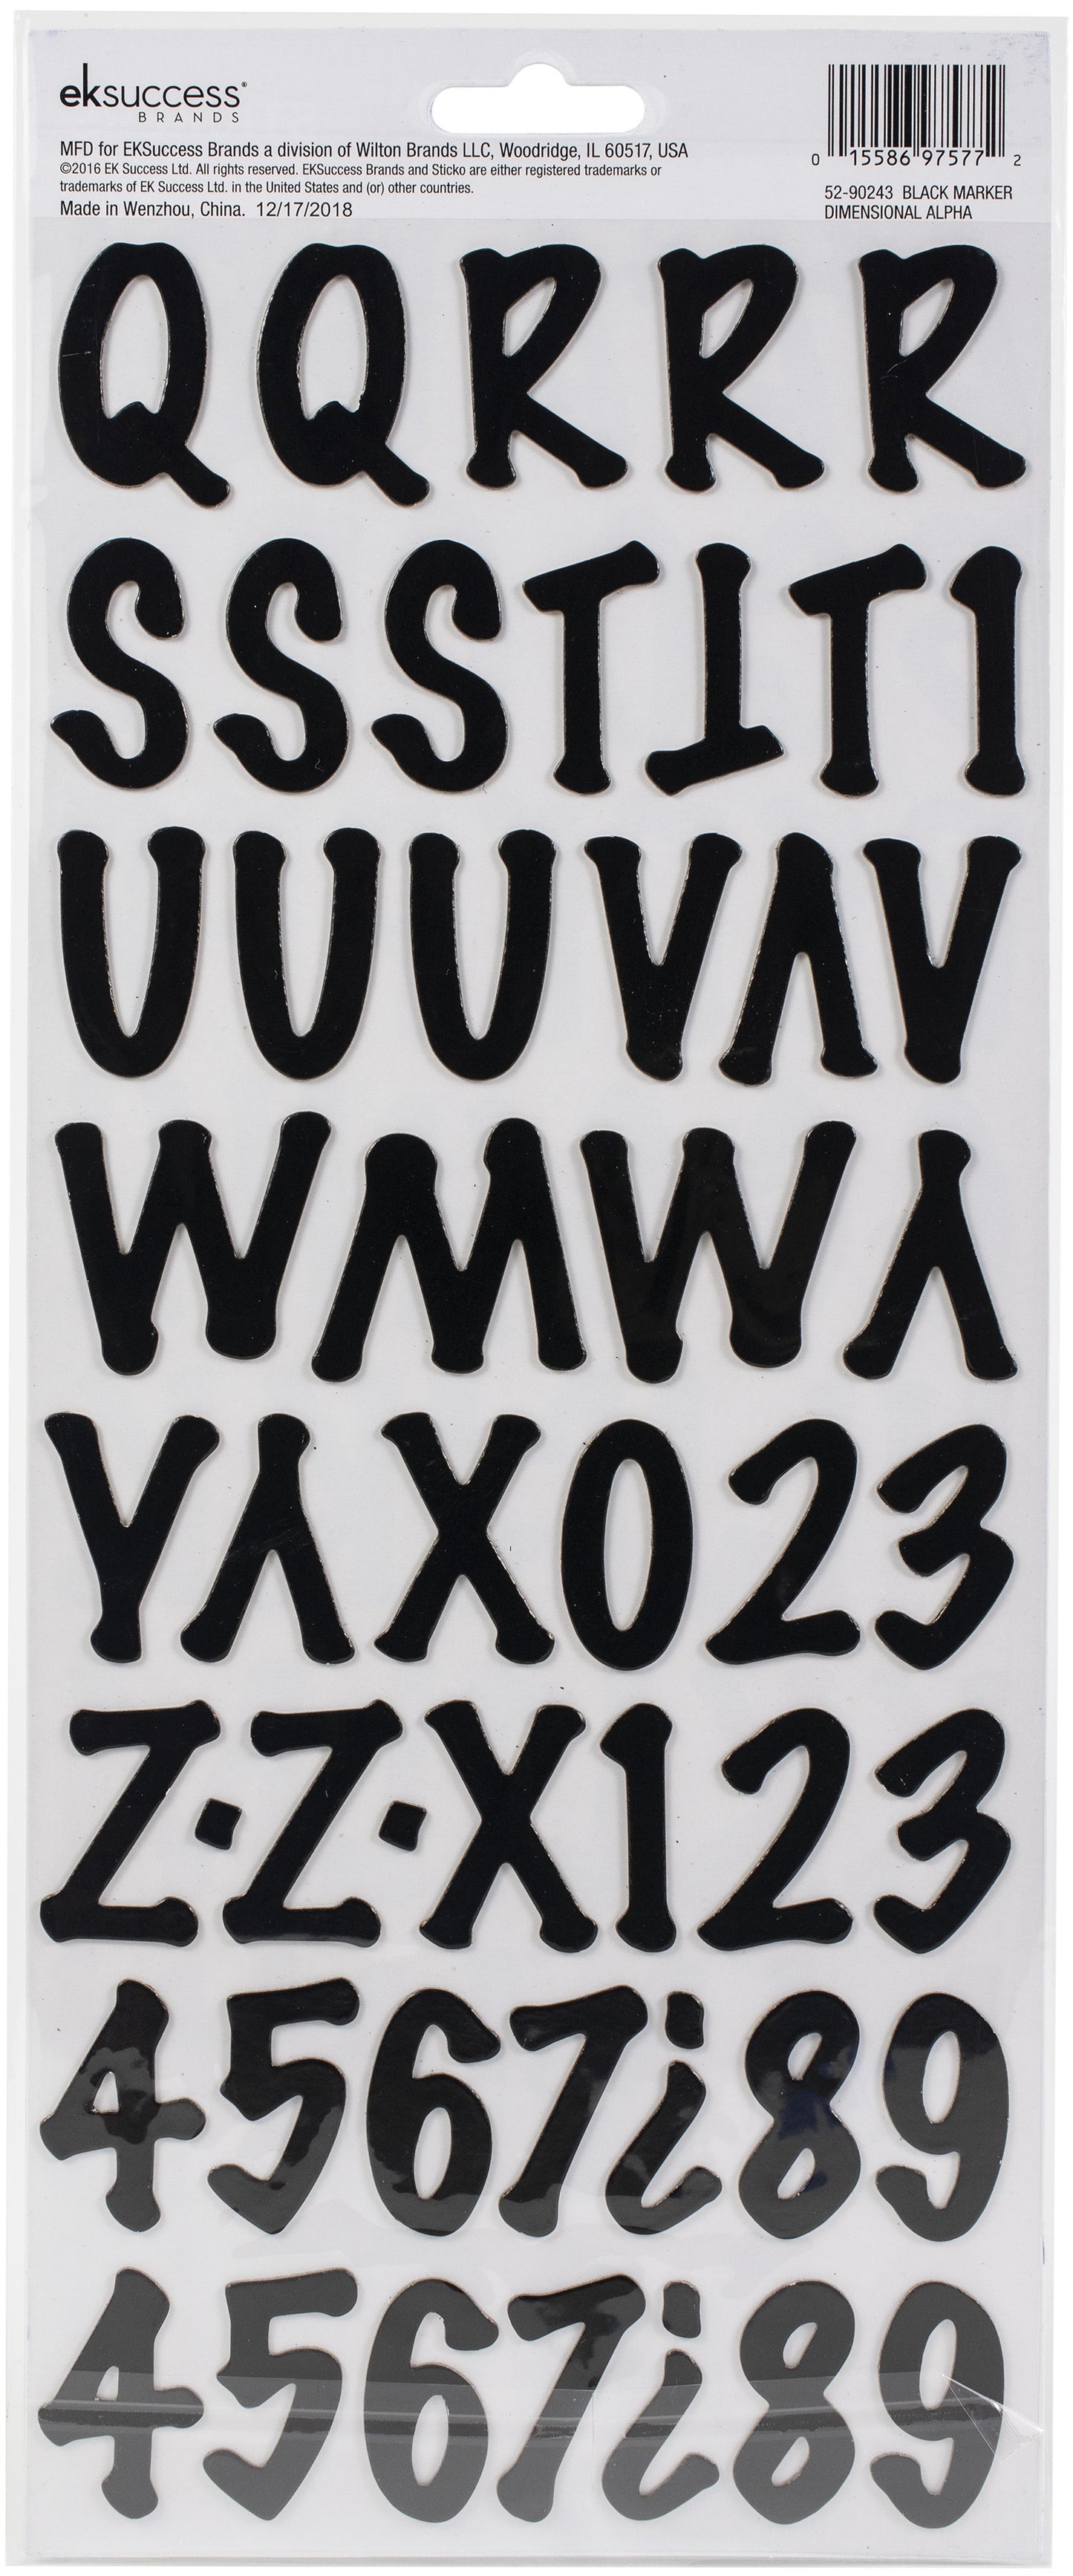 Sticko Alphabet Stickers 101/Pkg-Marker - Black